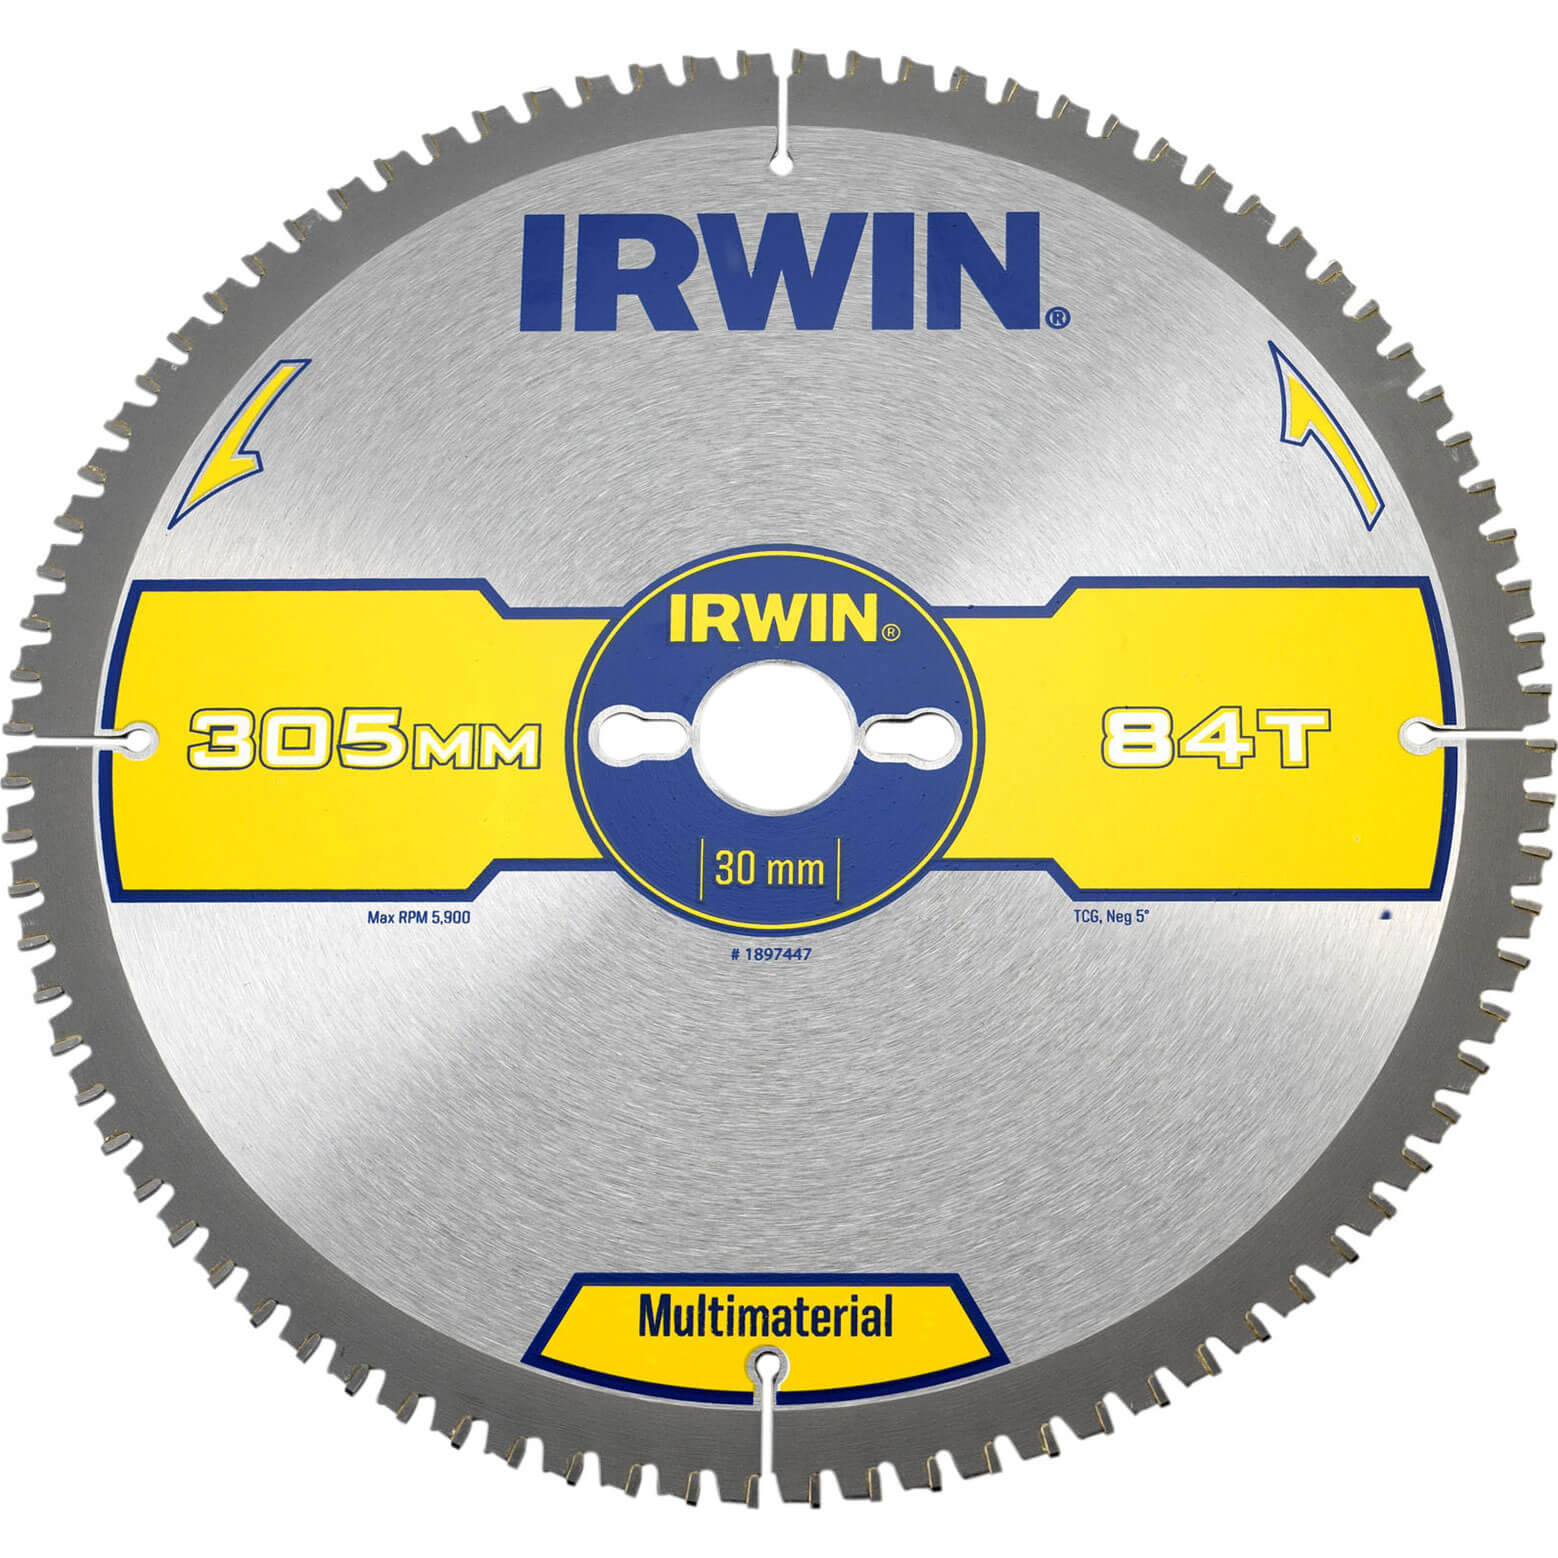 Photo of Irwin Multi Material Circular Saw Blade 305mm 84t 30mm